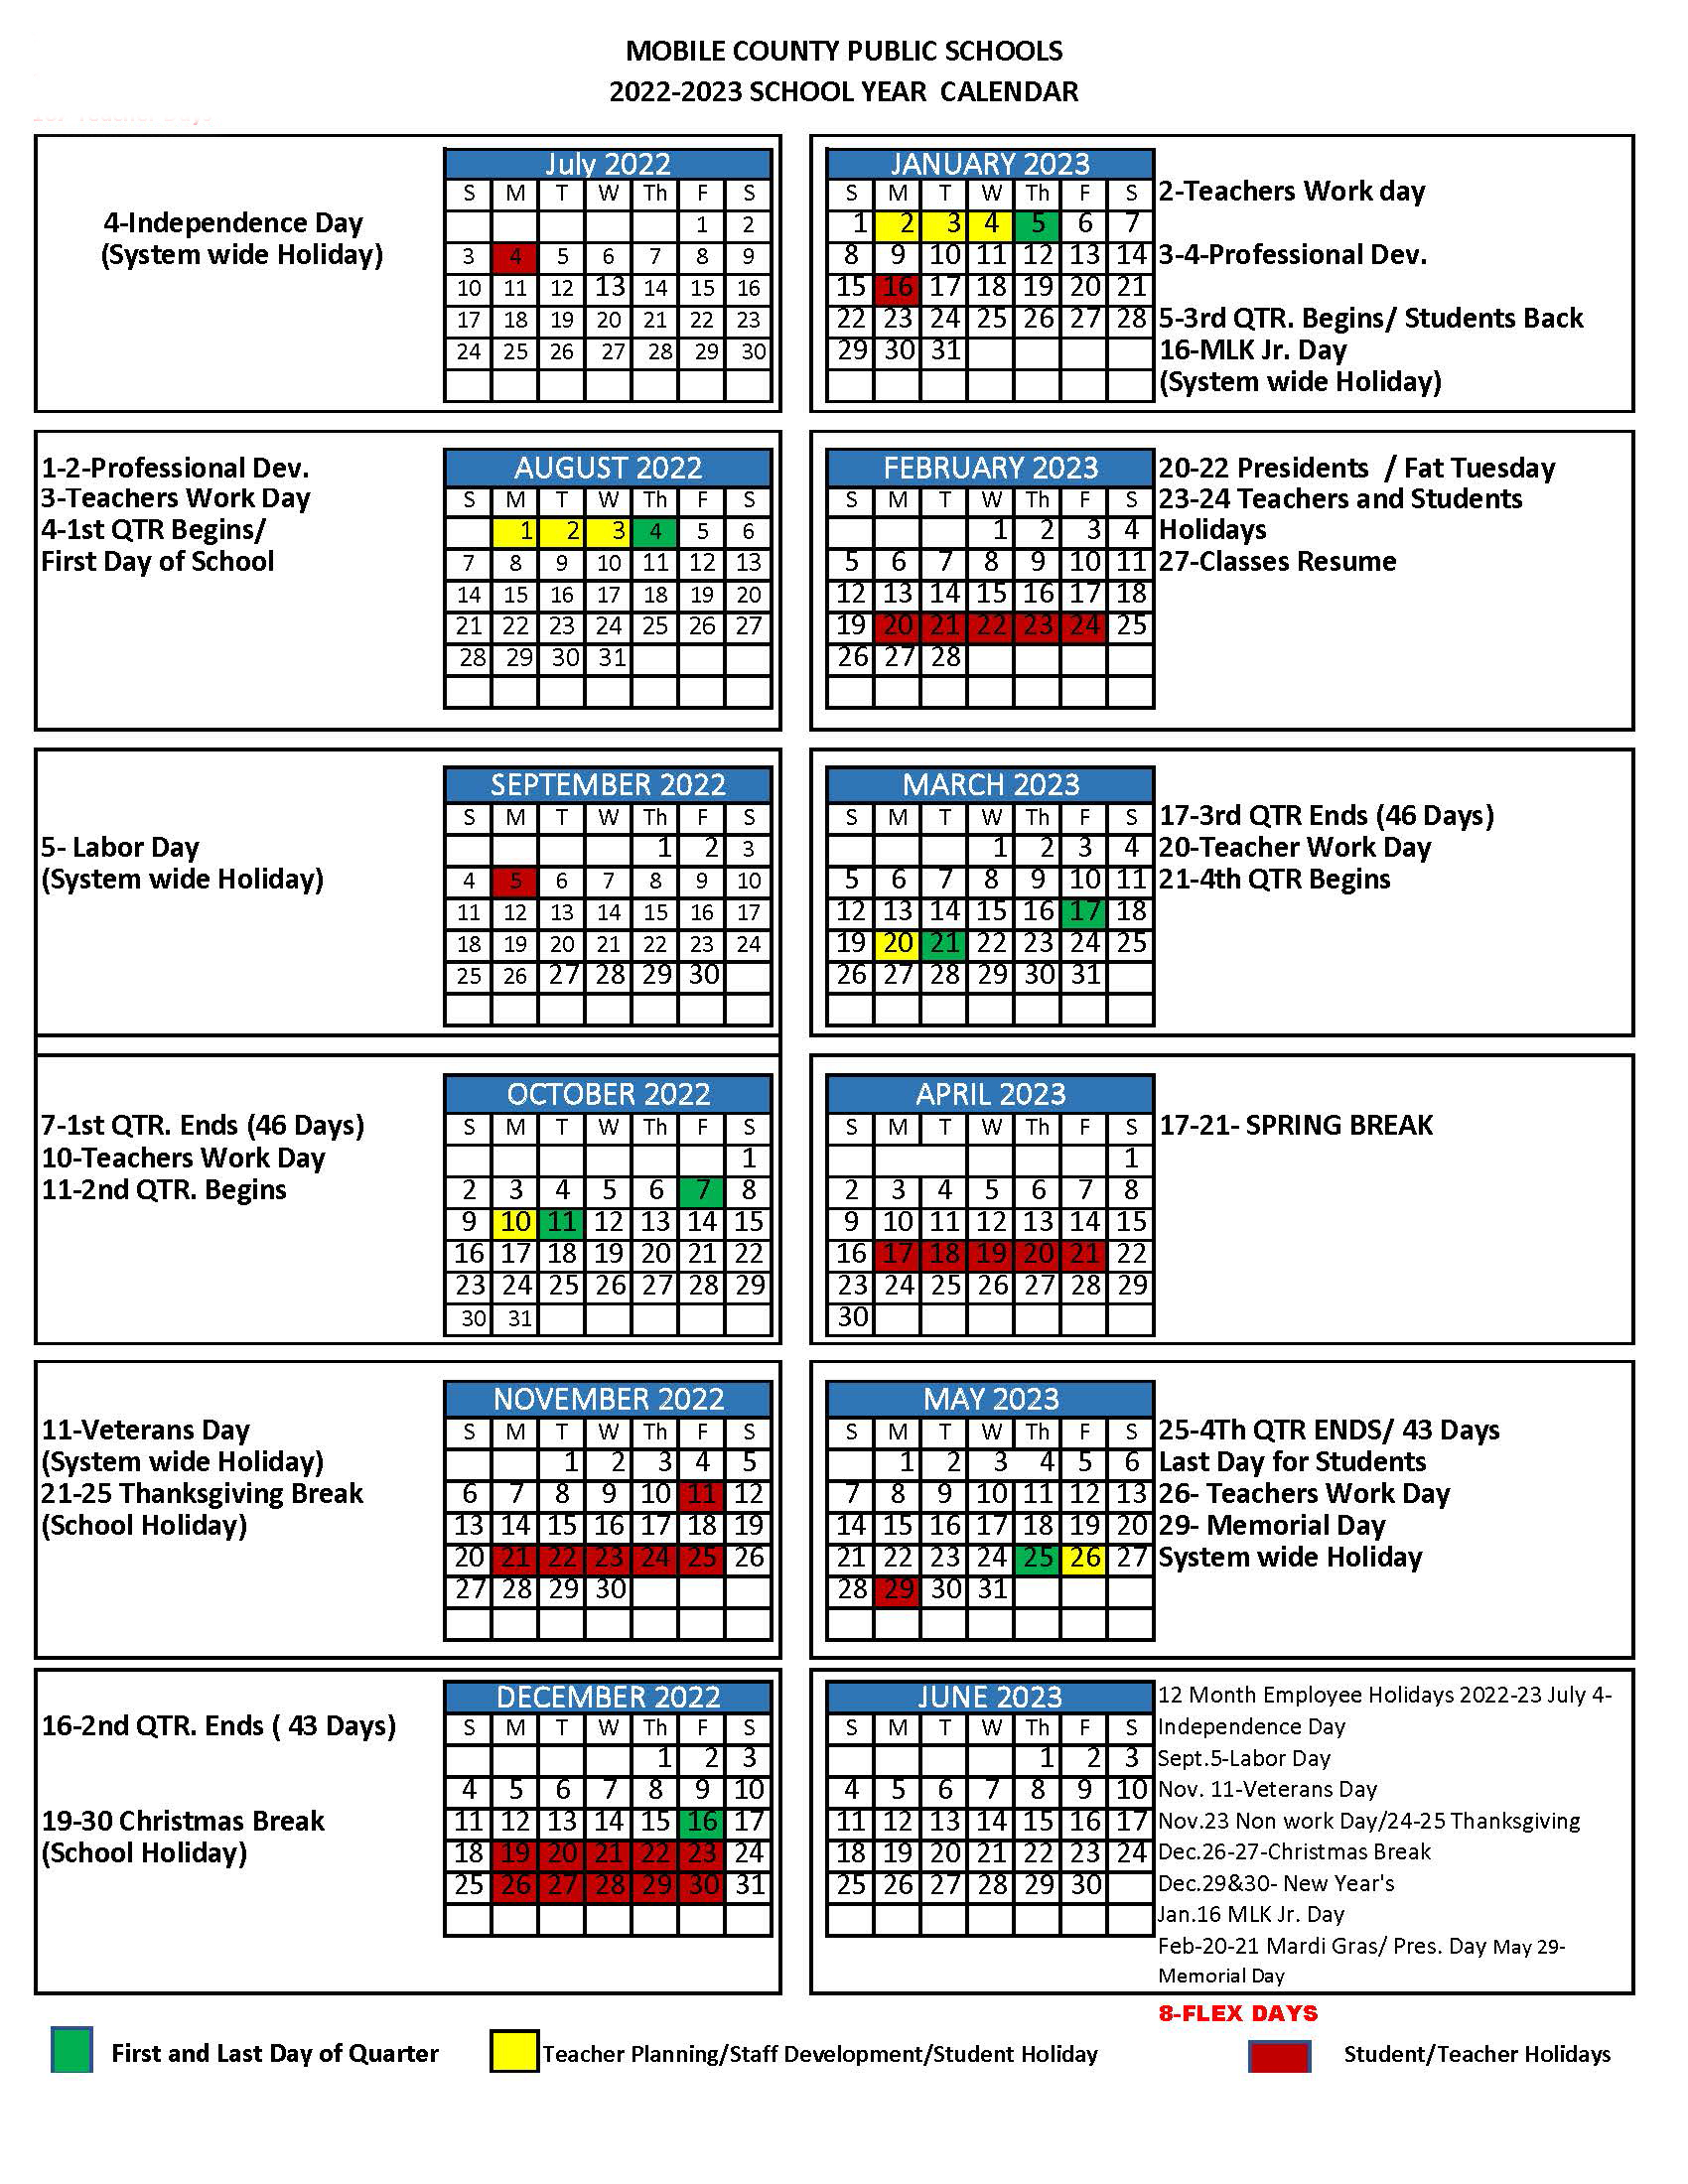 Image of MCPSS 2022 - 2023 calendar.